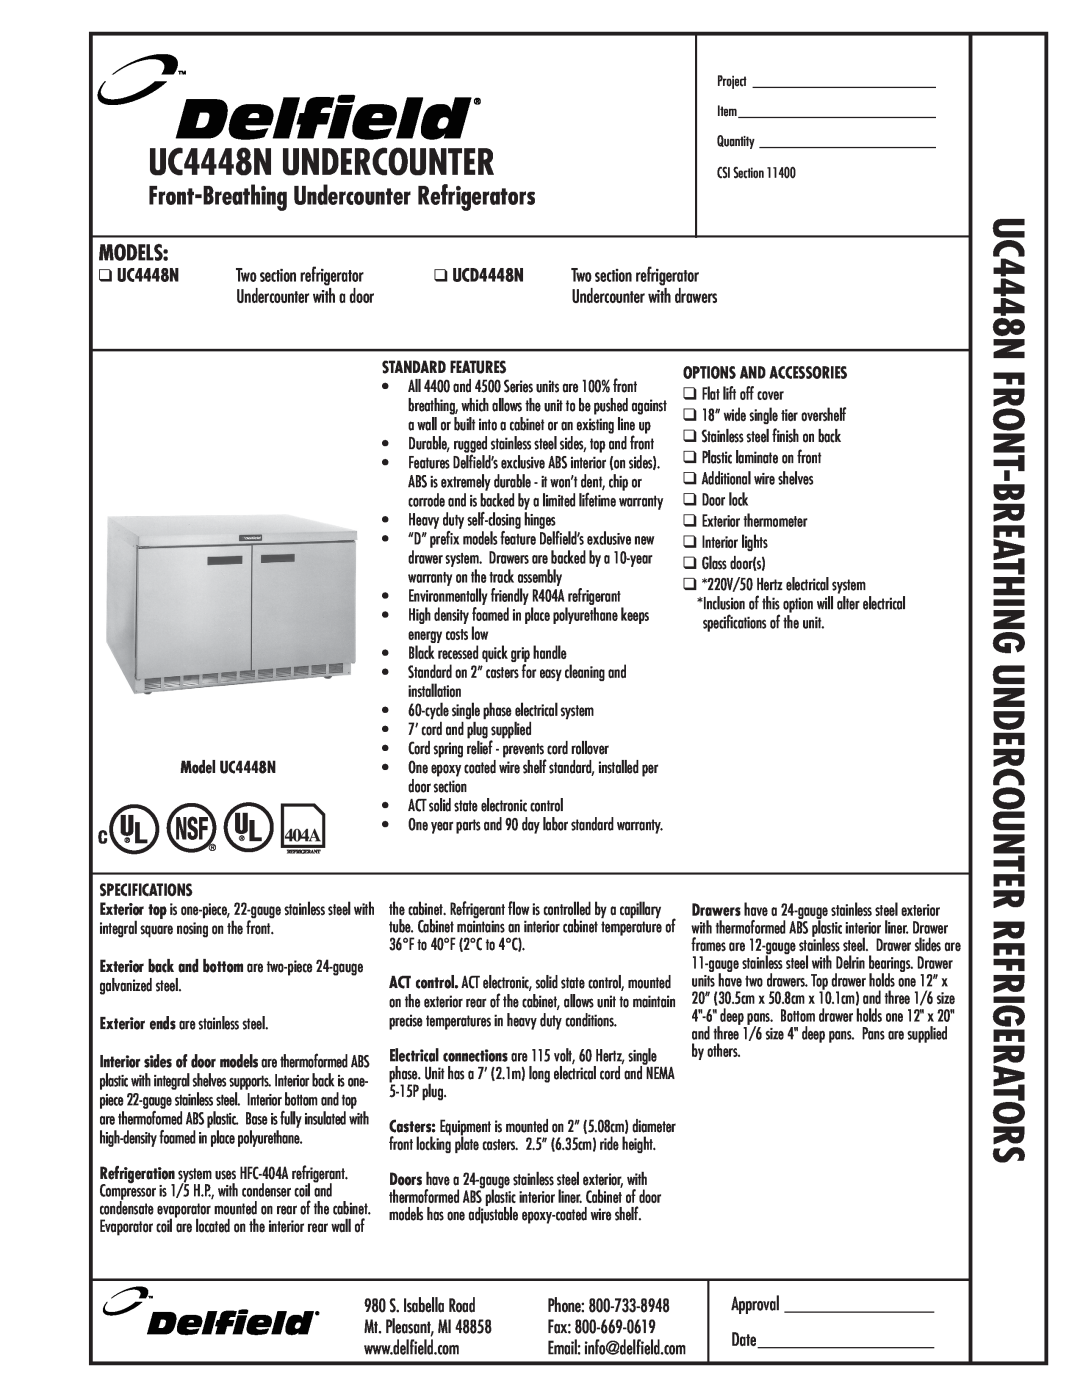 Delfield specifications Front-Breathing Undercounter, Models, Refrigerators, UC4448N UNDERCOUNTER, UCD4448N 